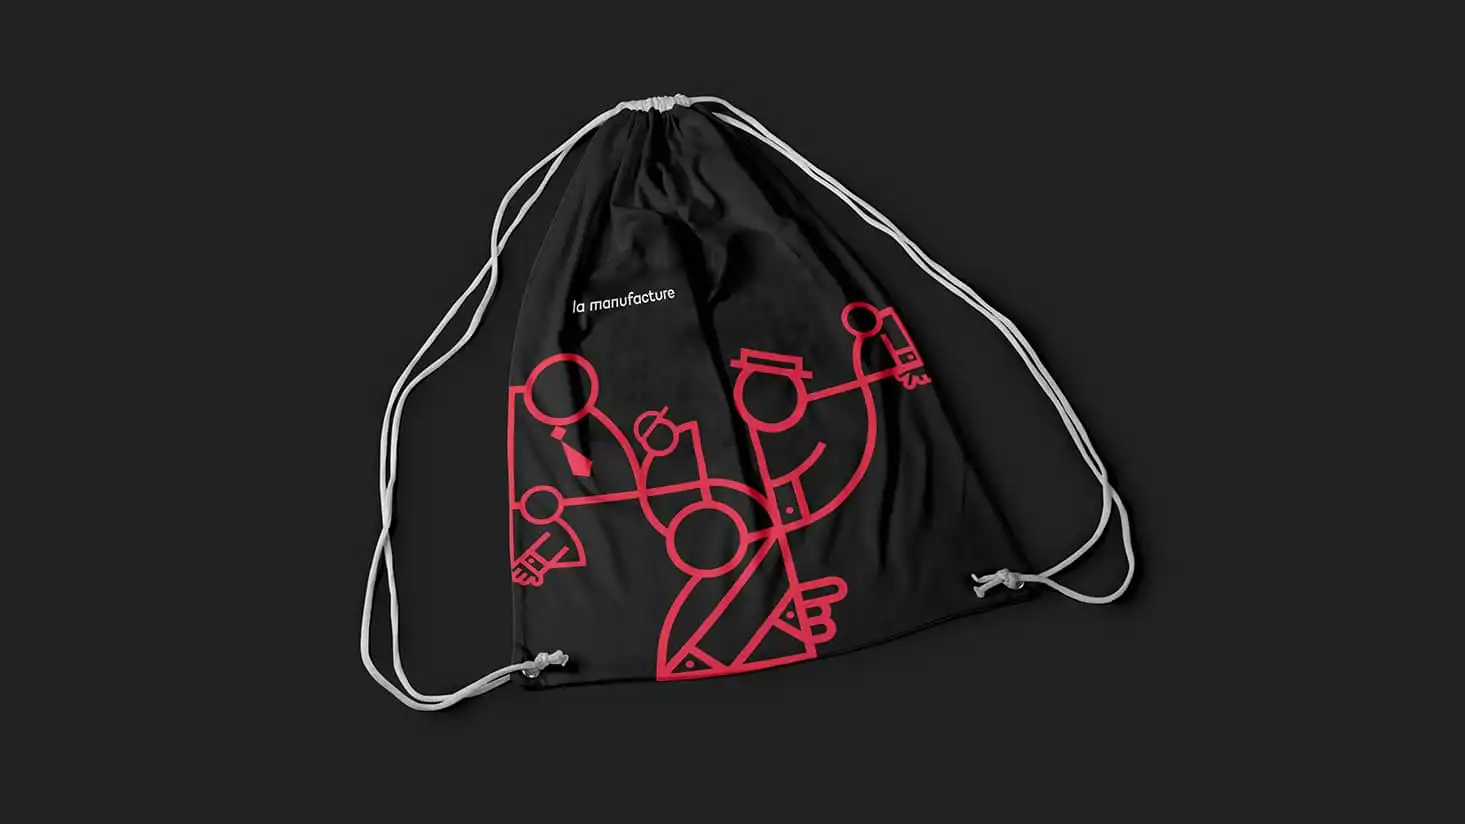 La Manufacture's bag design